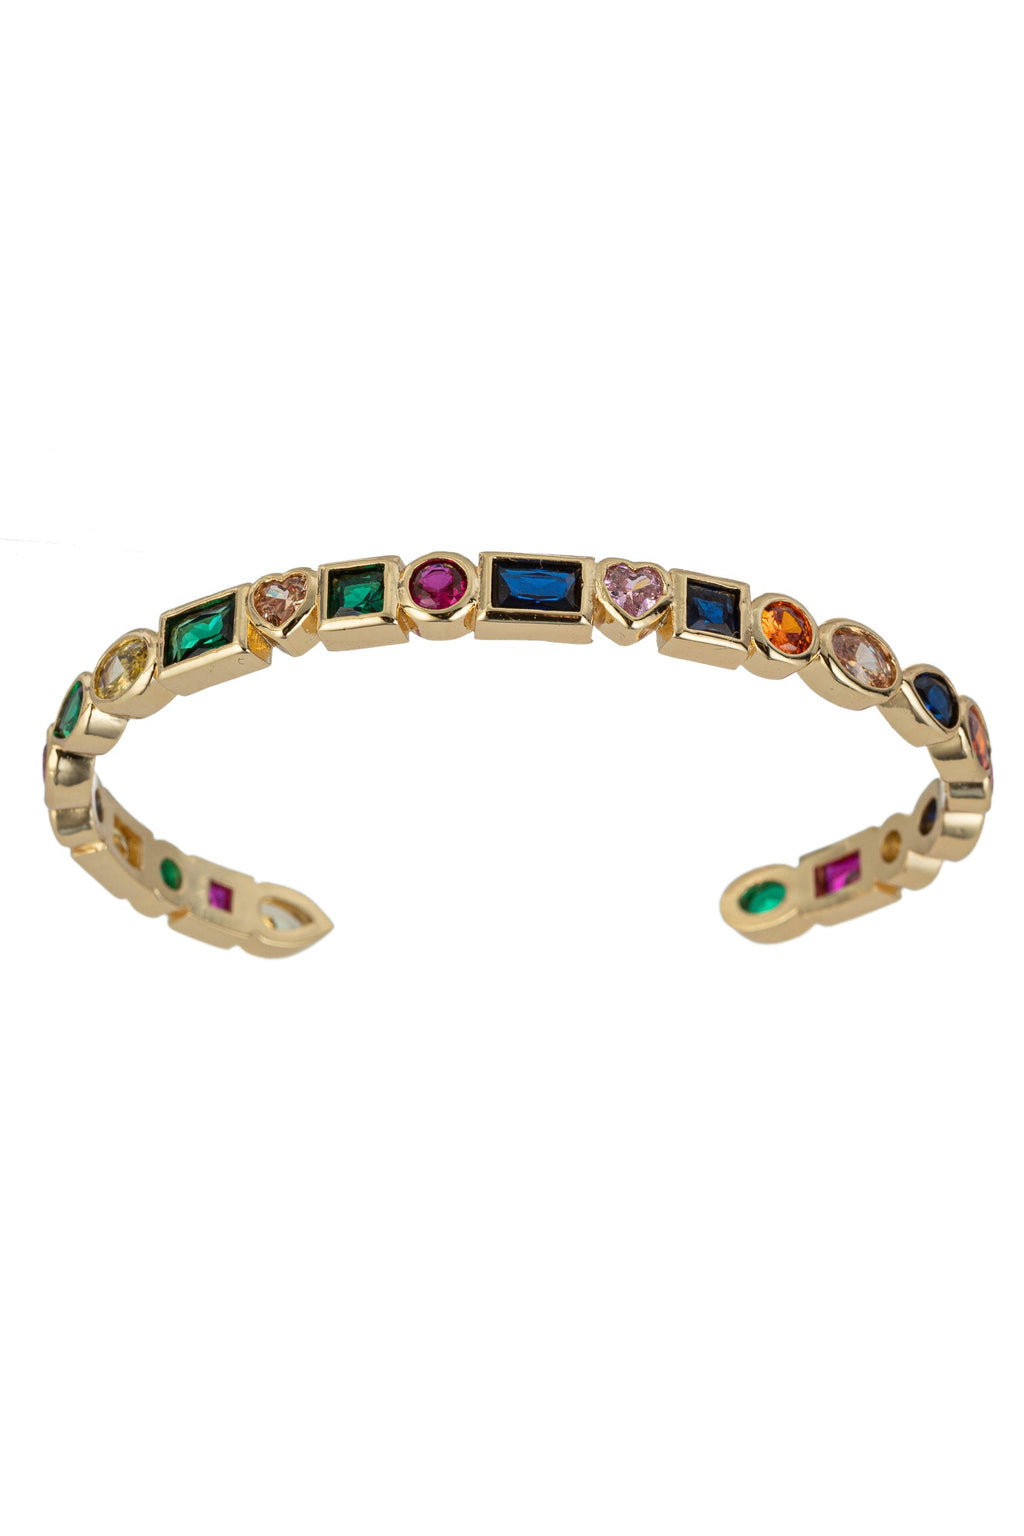 Emily Rainbow Cubic Zirconia Cuff Bracelet: Where Elegance Meets Radiance.